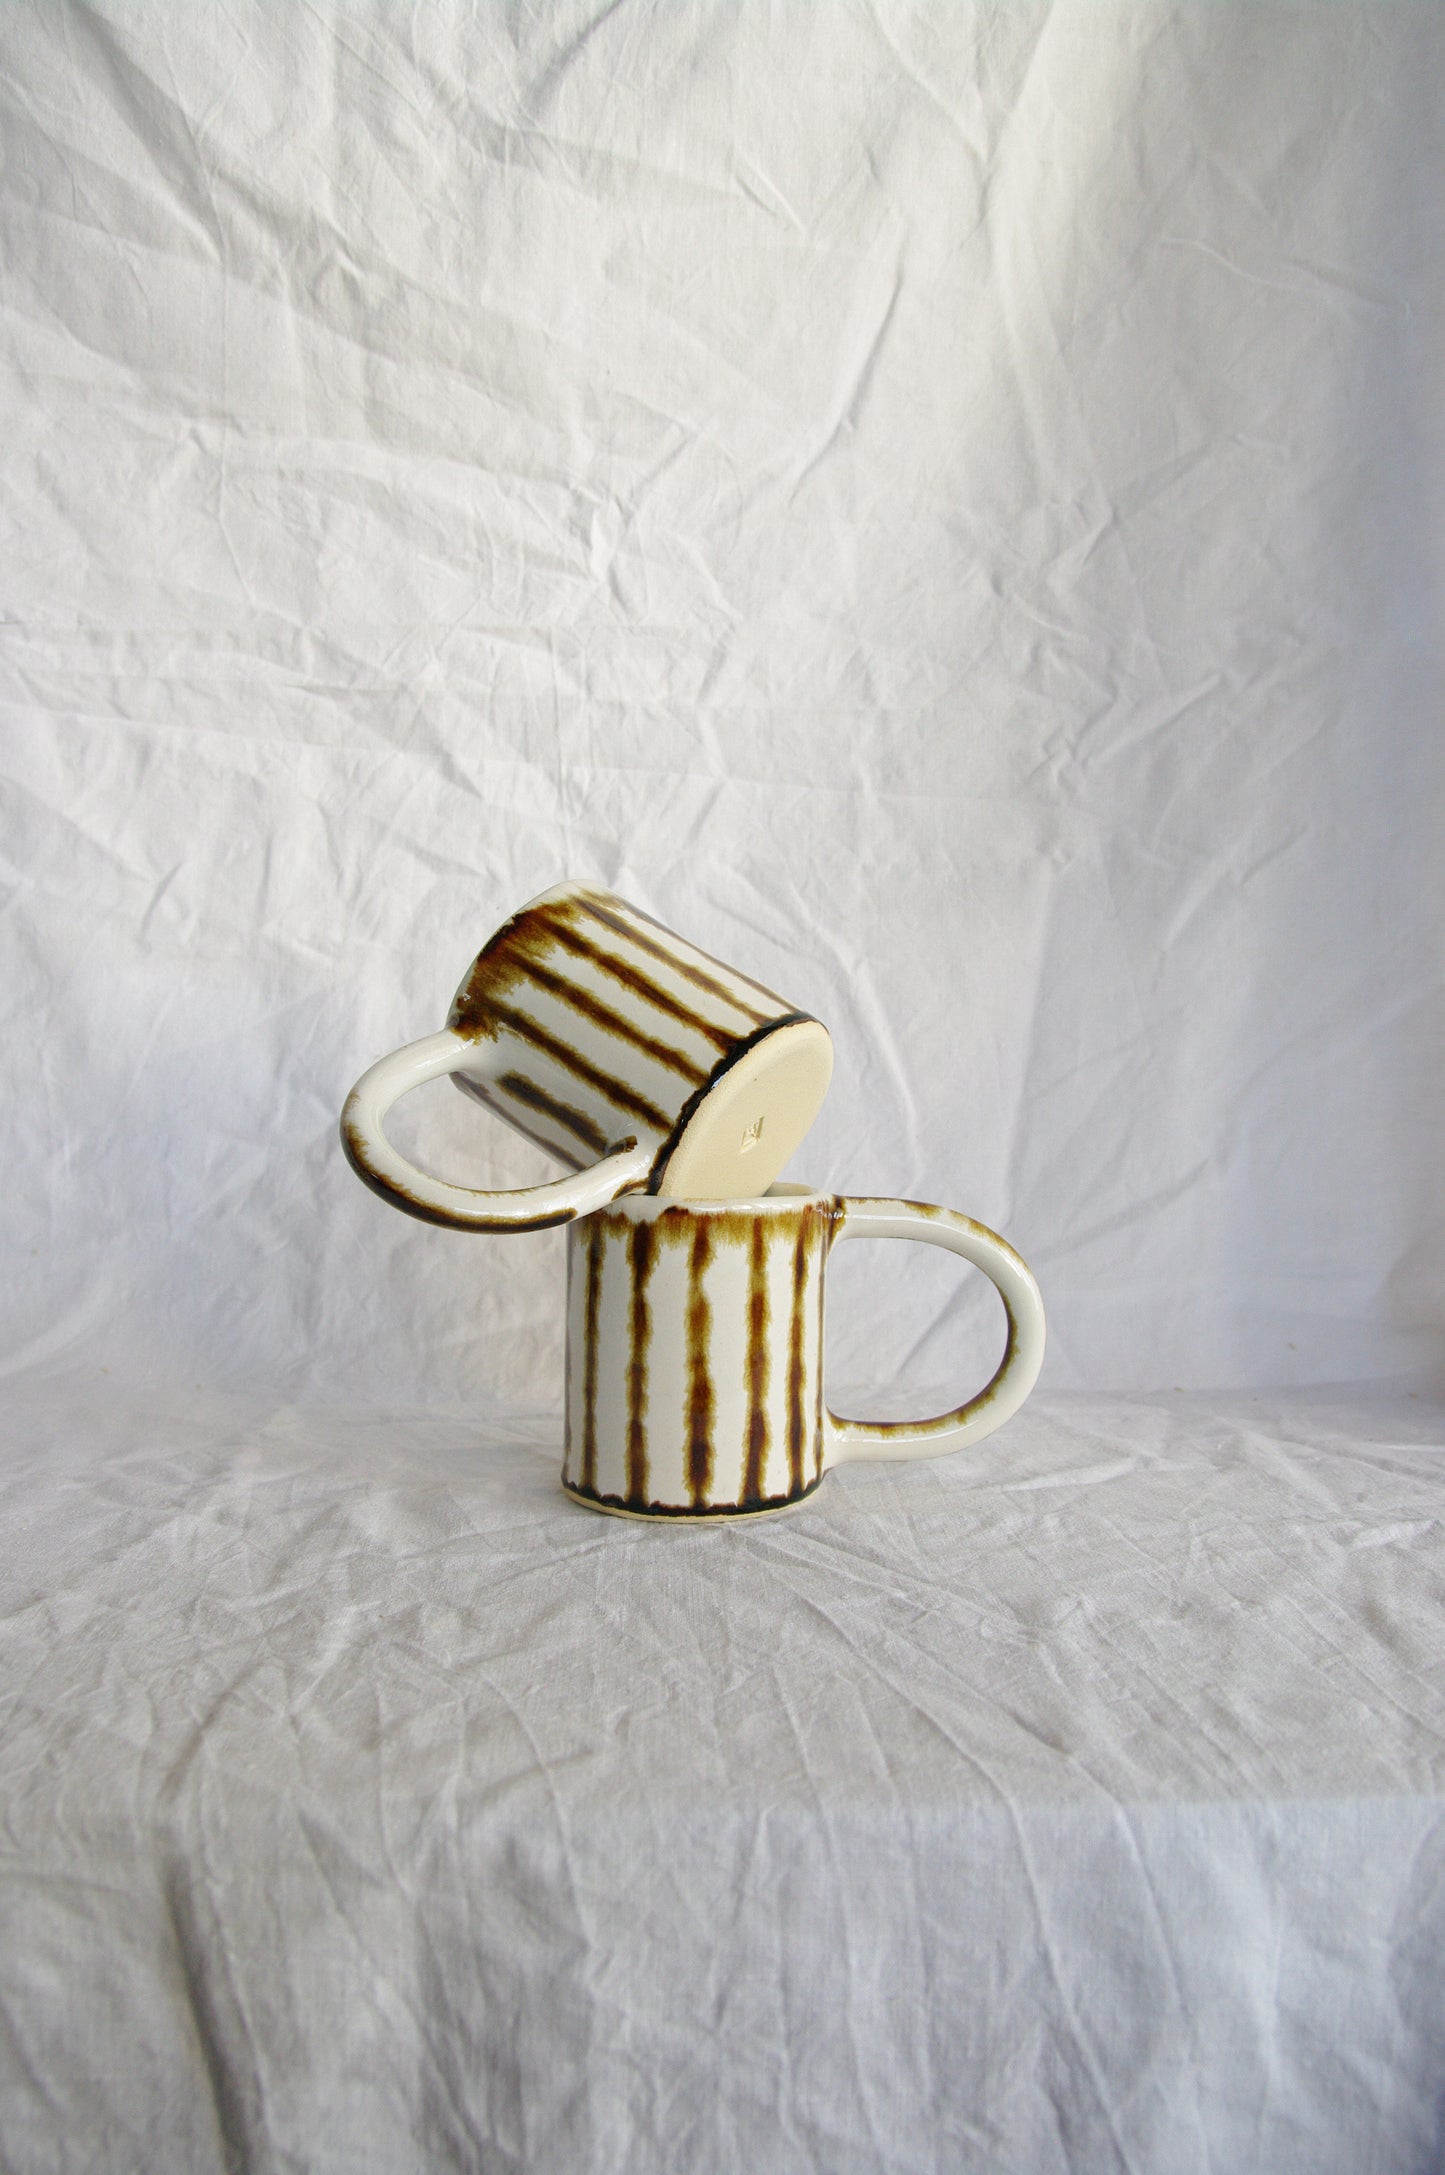 "Striped Mug" Artwork by Daisy Eltenton